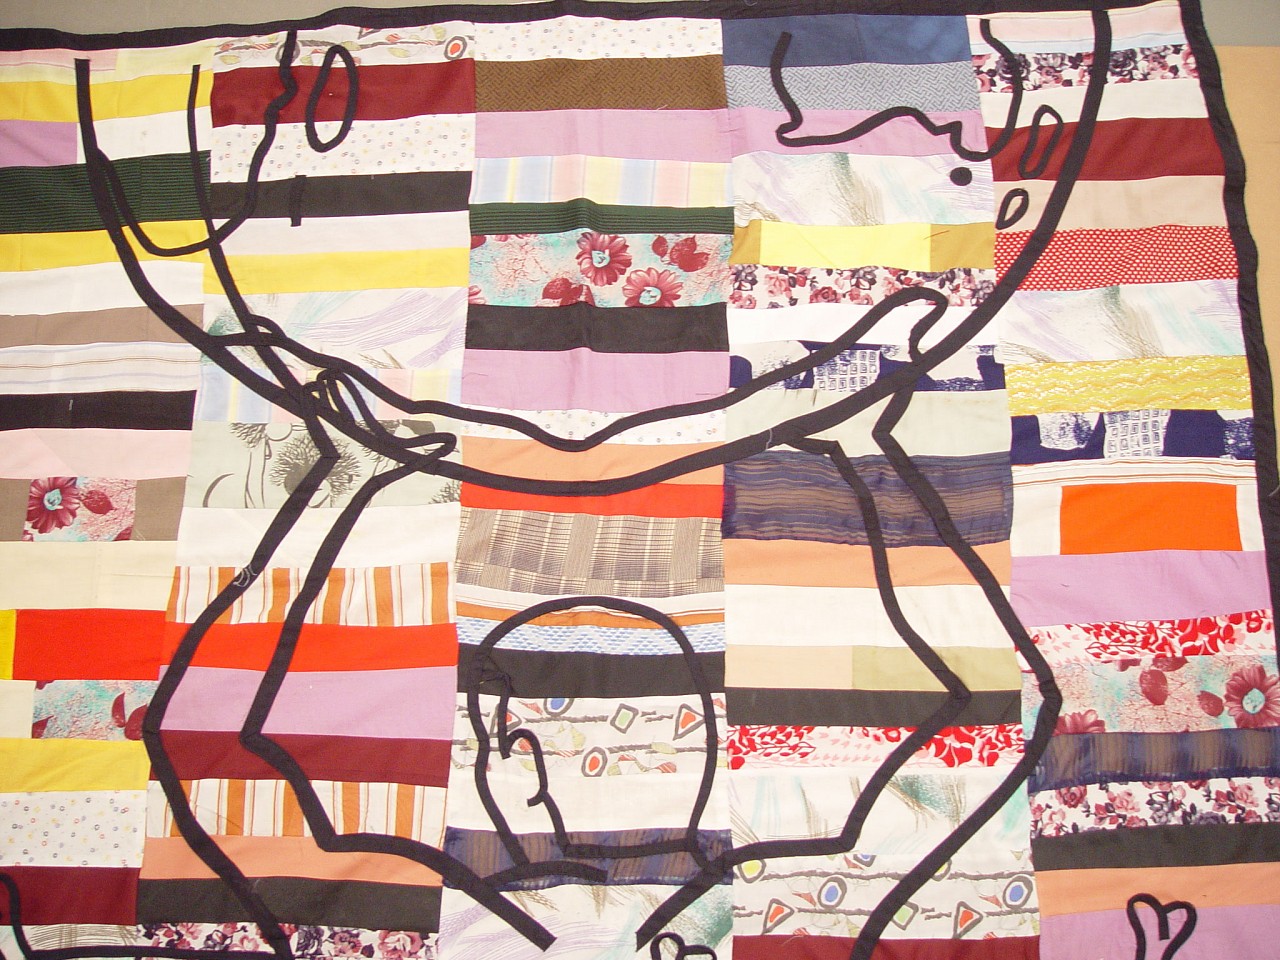 IBRAHIM MIRANDA, San Cristobal, 1997
Sew Canvas with applications, 52 3/8 x 63 3/8 in. (133 x 161 cm)
MI-O-0007